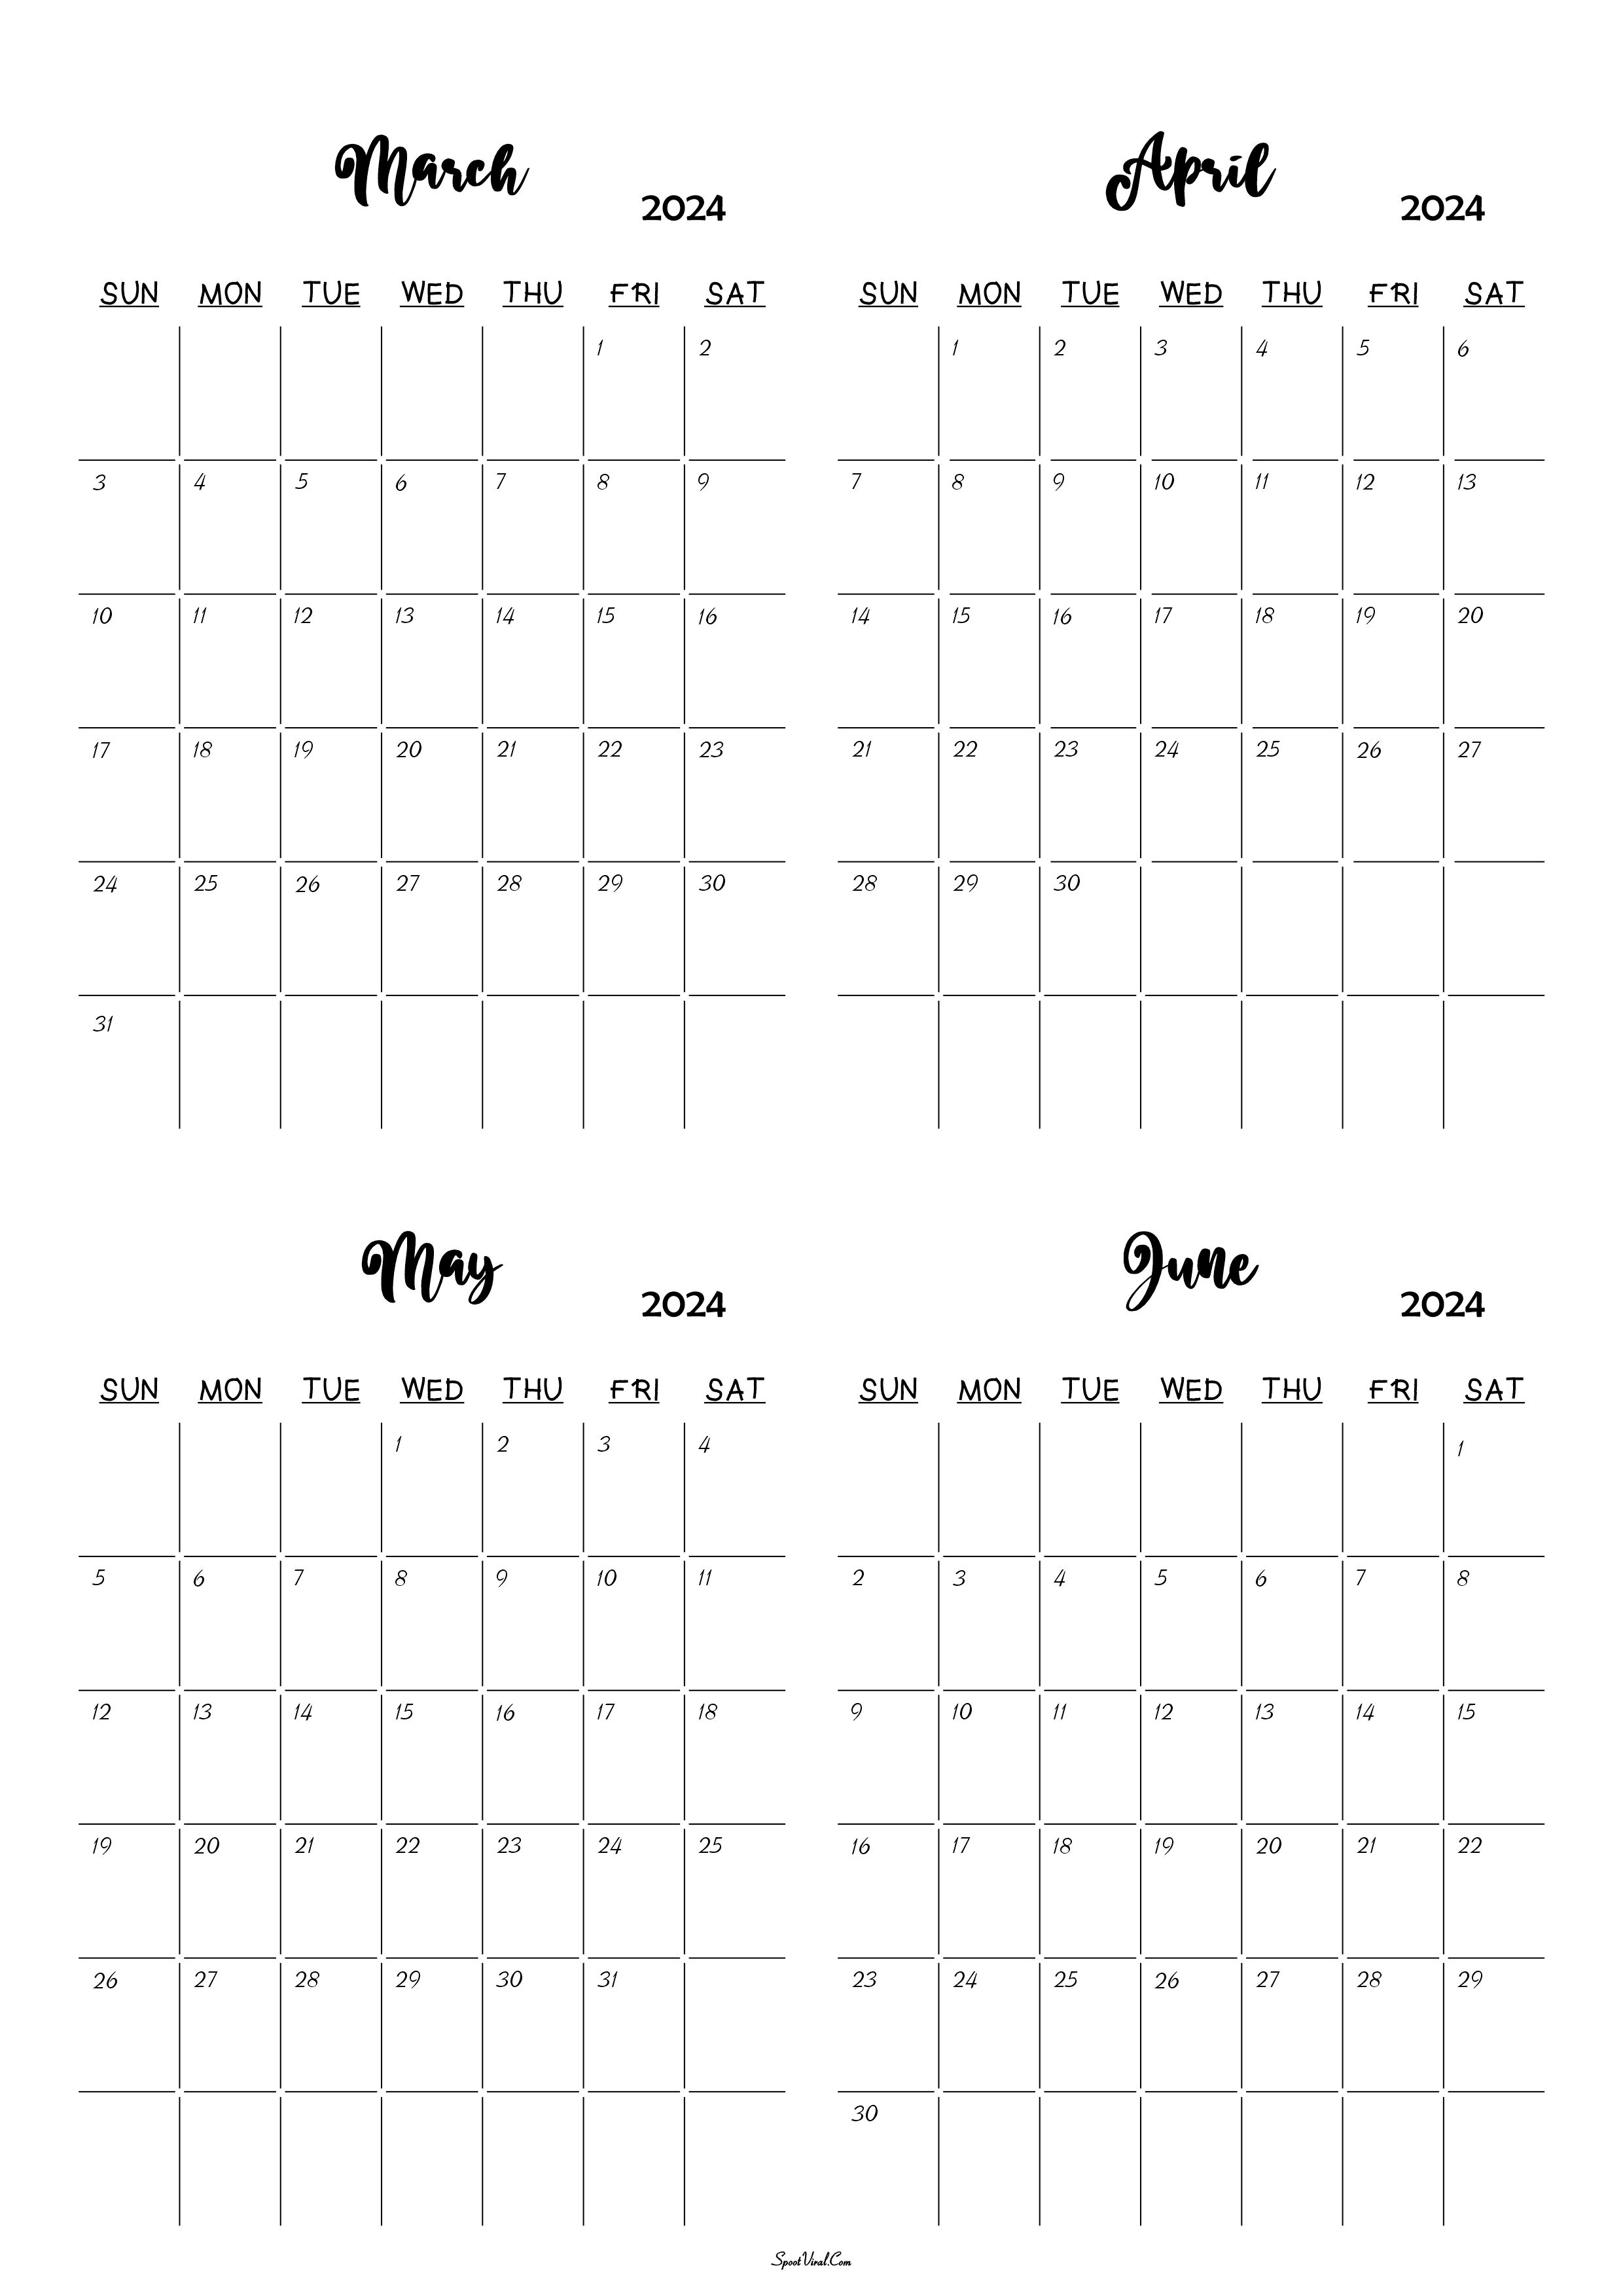 March to June 2024 Calendar